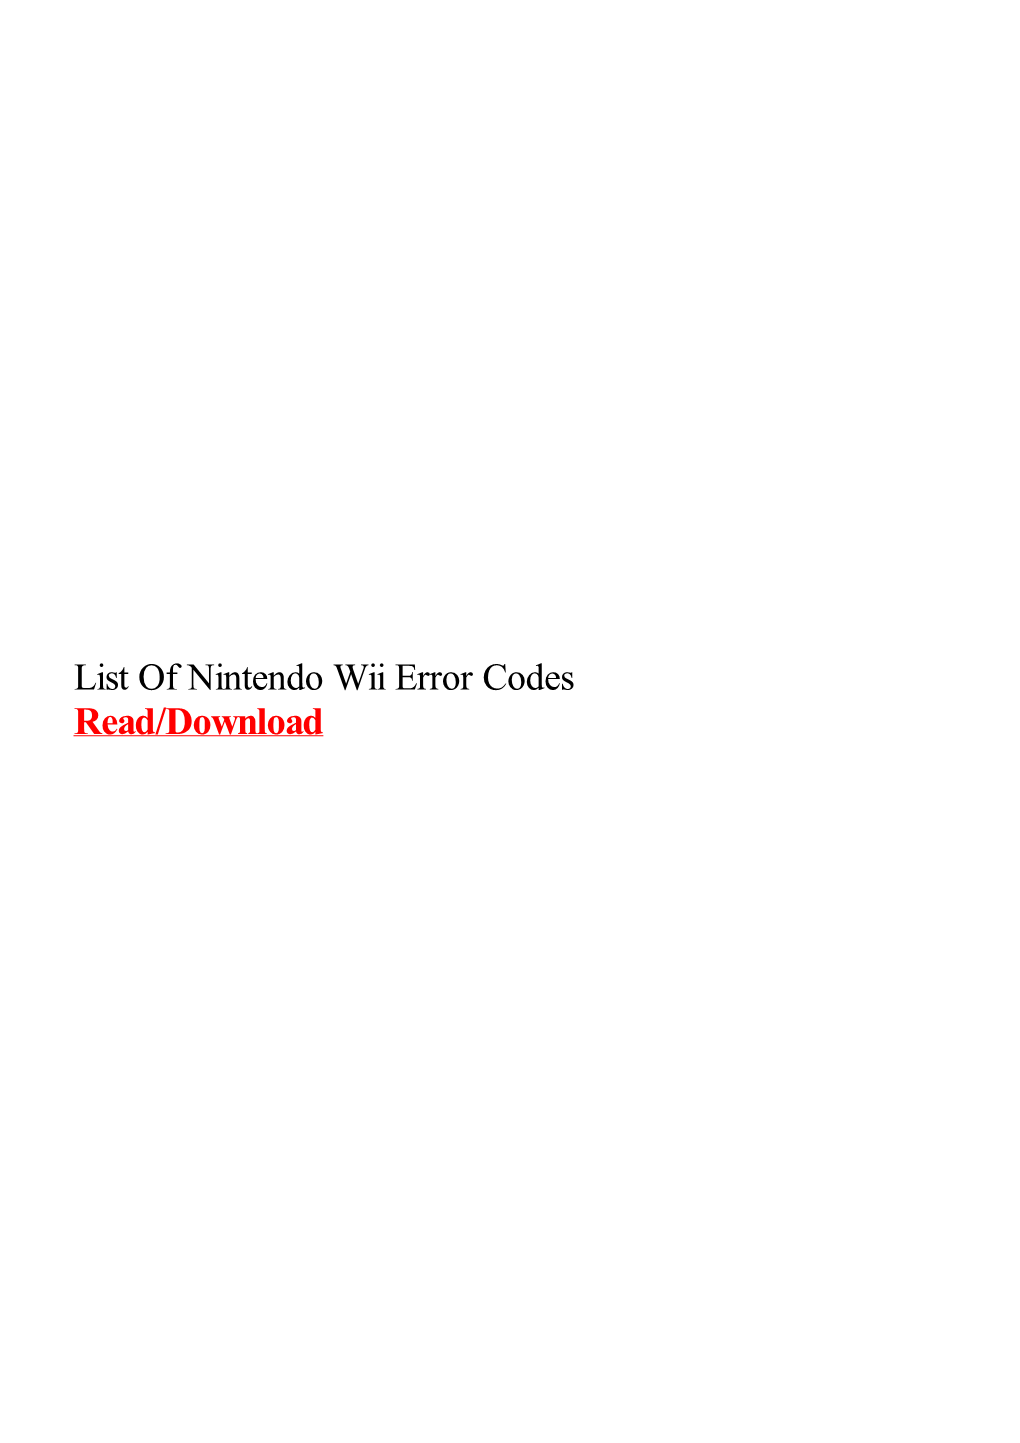 List of Nintendo Wii Error Codes